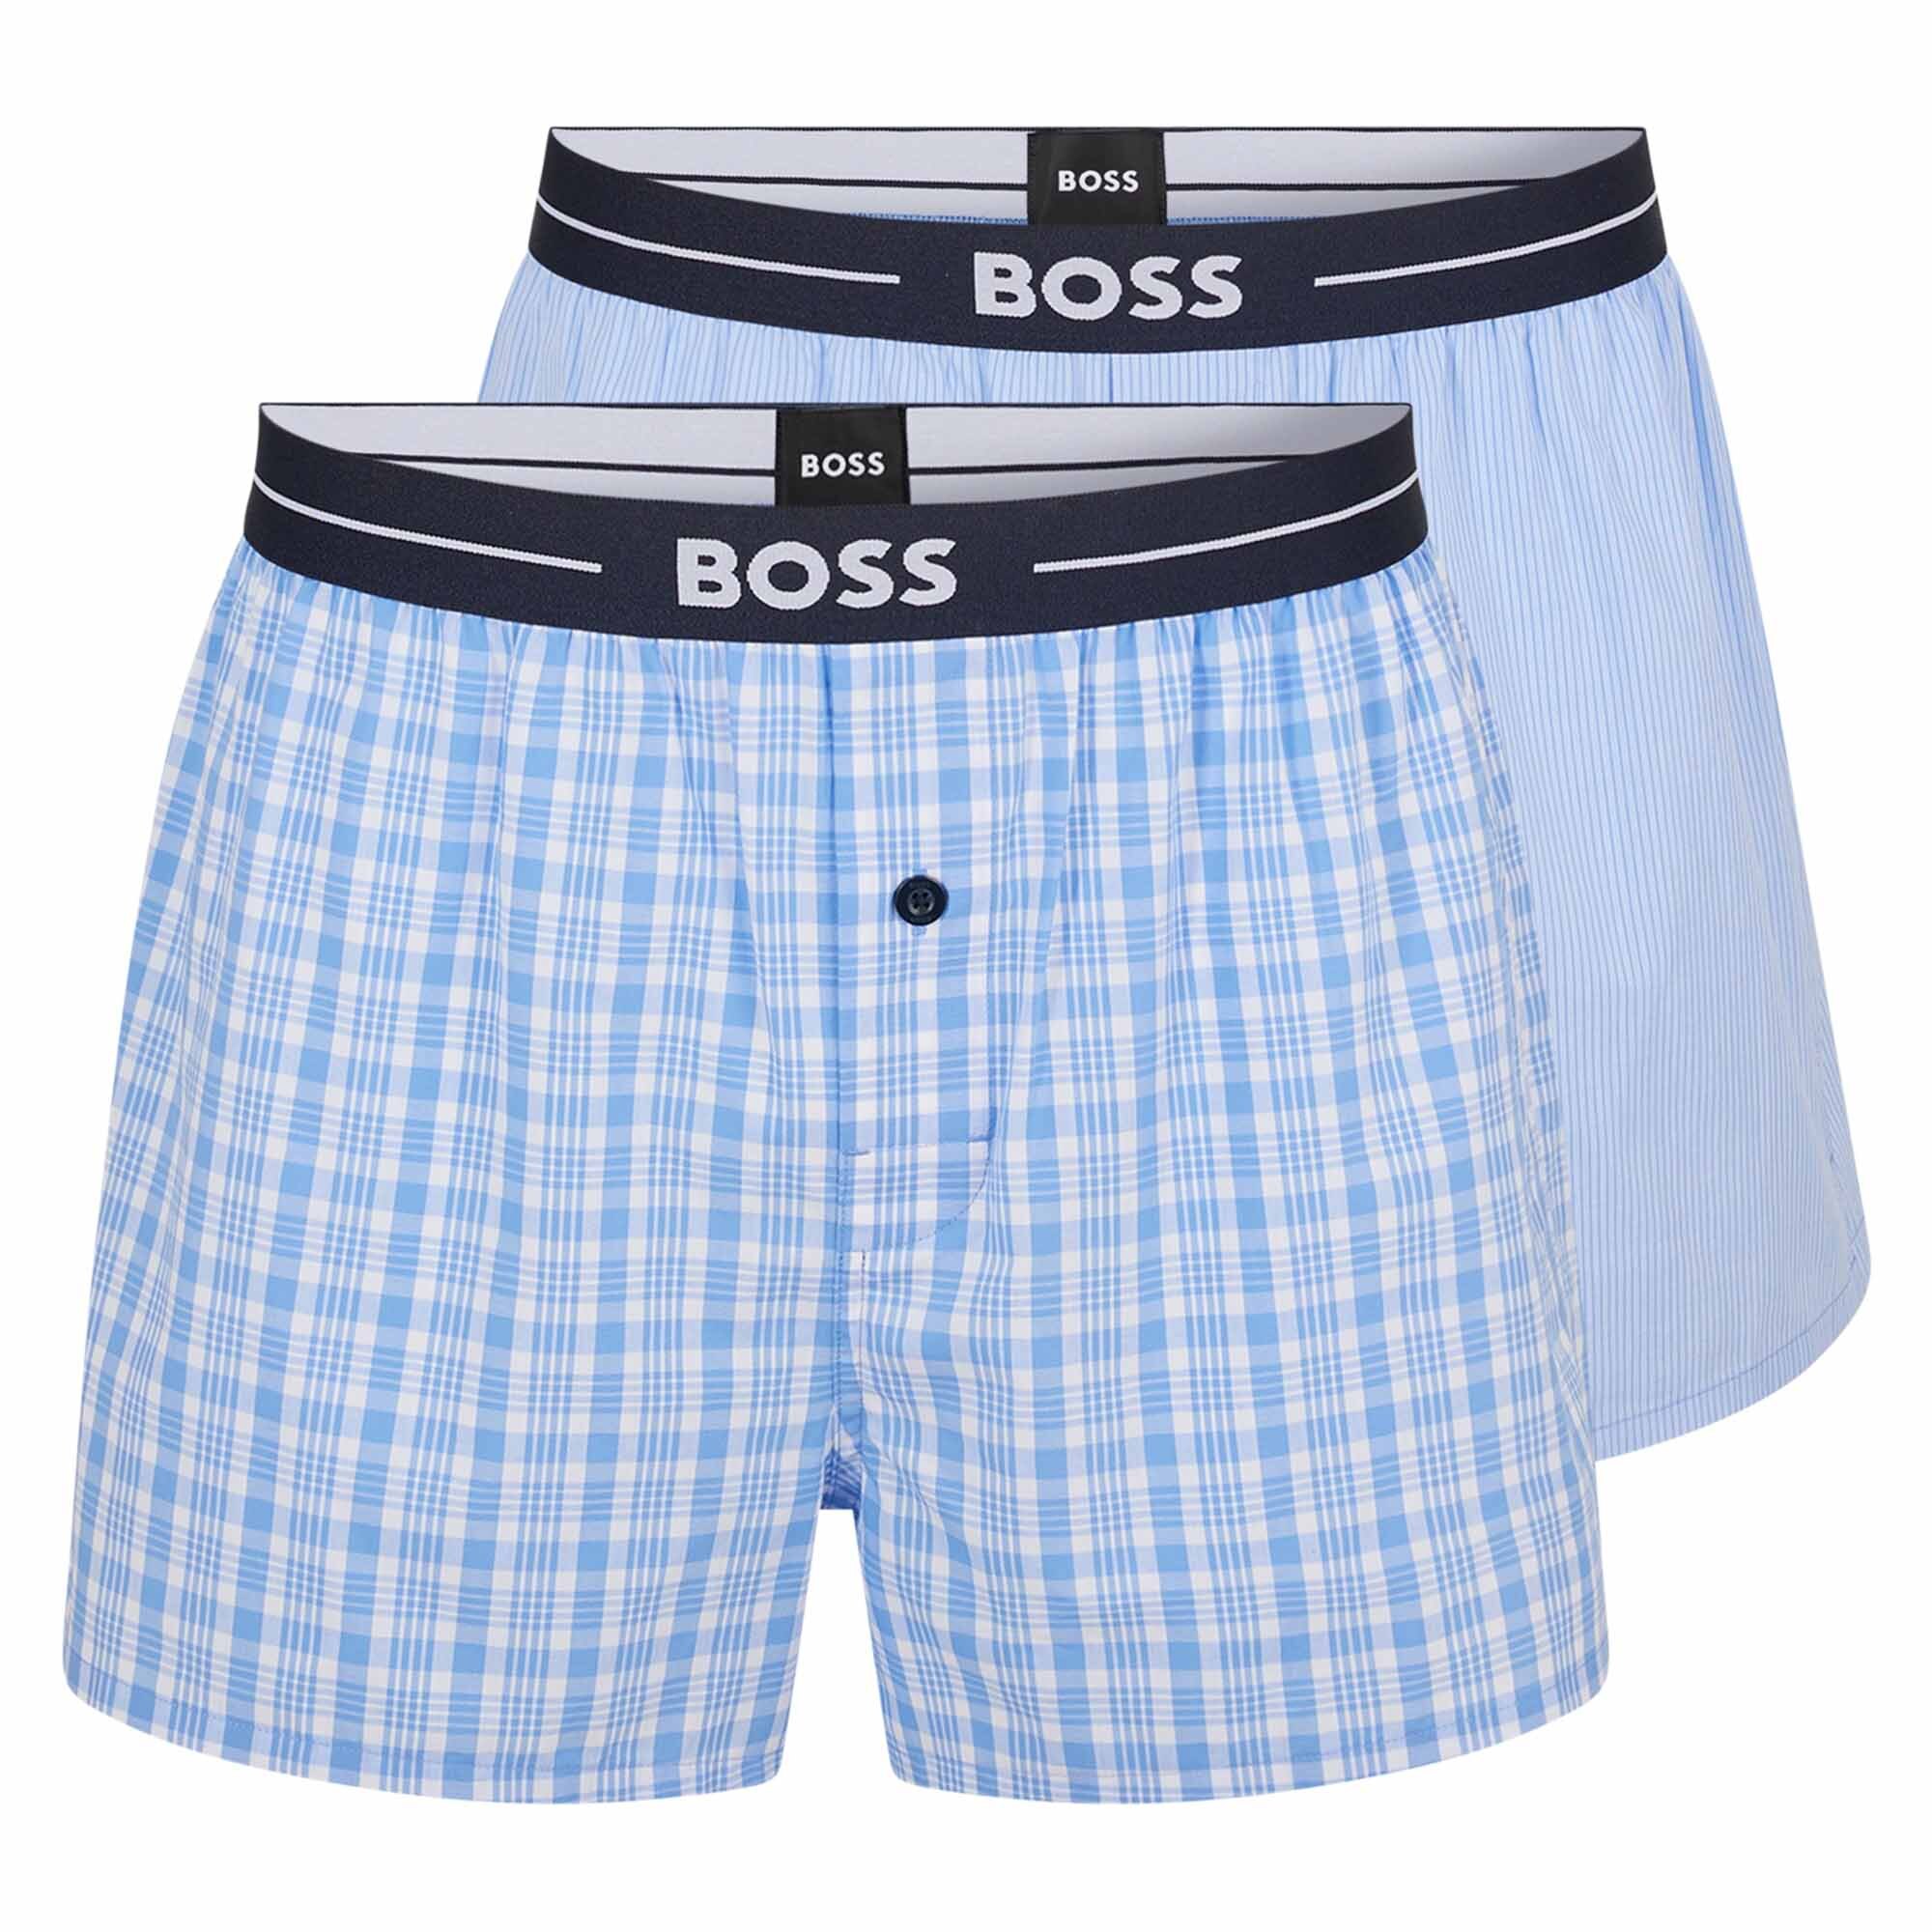 Боксеры BOSS Web-Boxershorts 2 шт, светло-синий